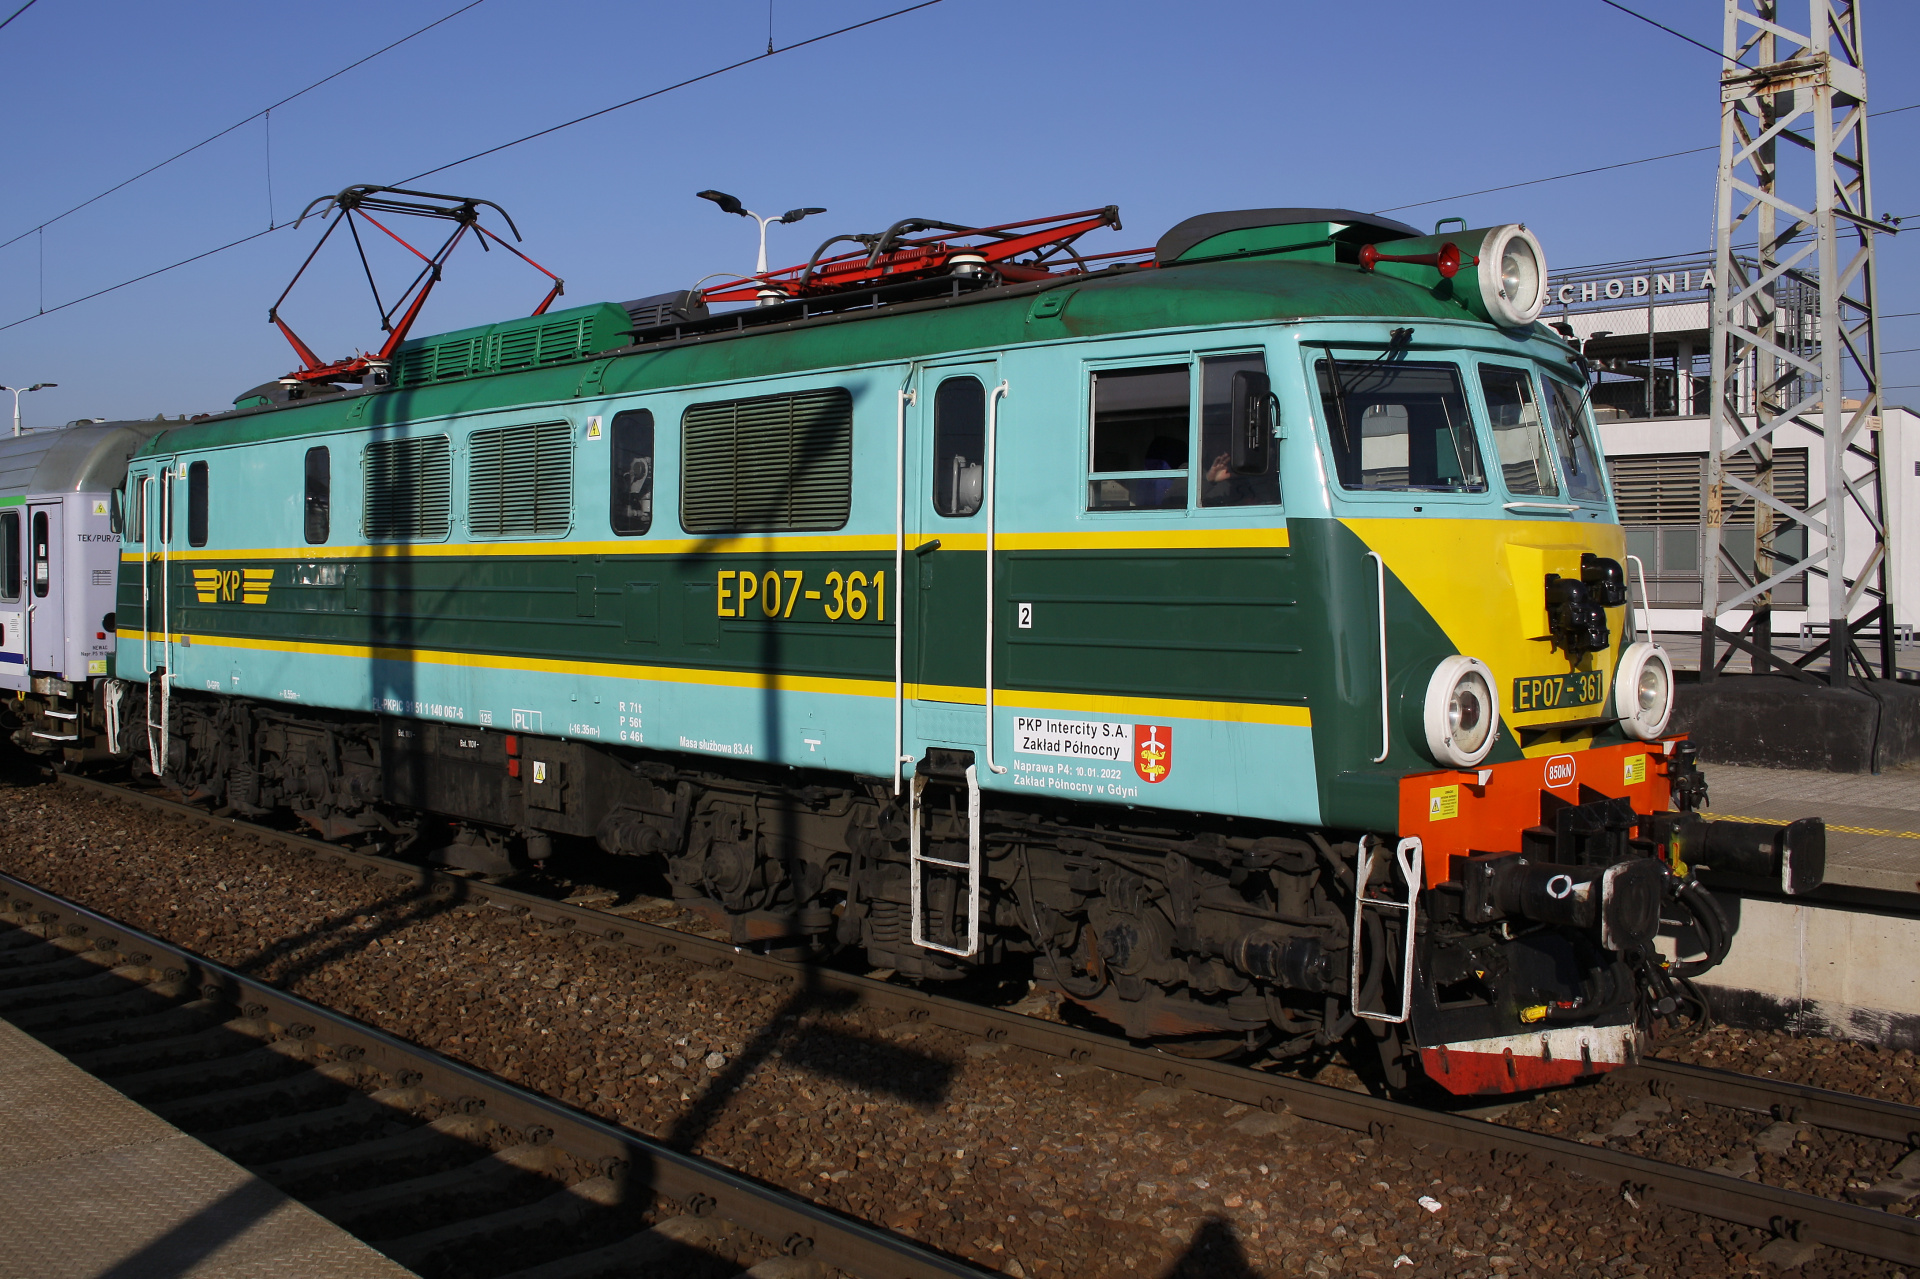 EP07-361 (retro livery) (Vehicles » Trains and Locomotives » HCP 303E)